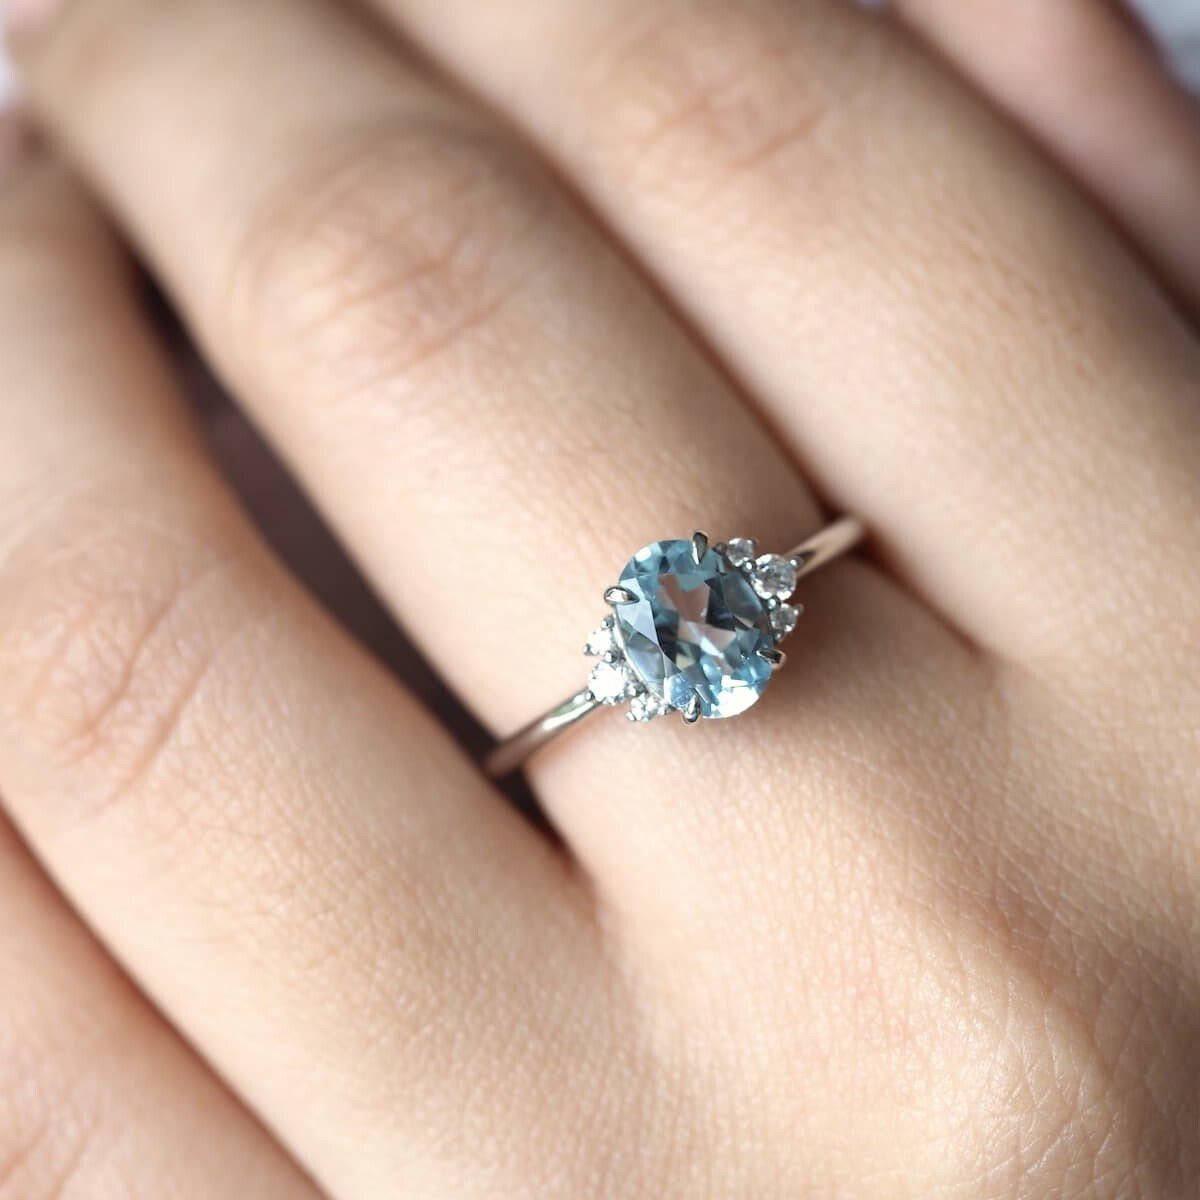 3Ct Pear Cut Aquamarine Diamond Halo Engagement Ring Solid 14K White Gold  Finish | eBay